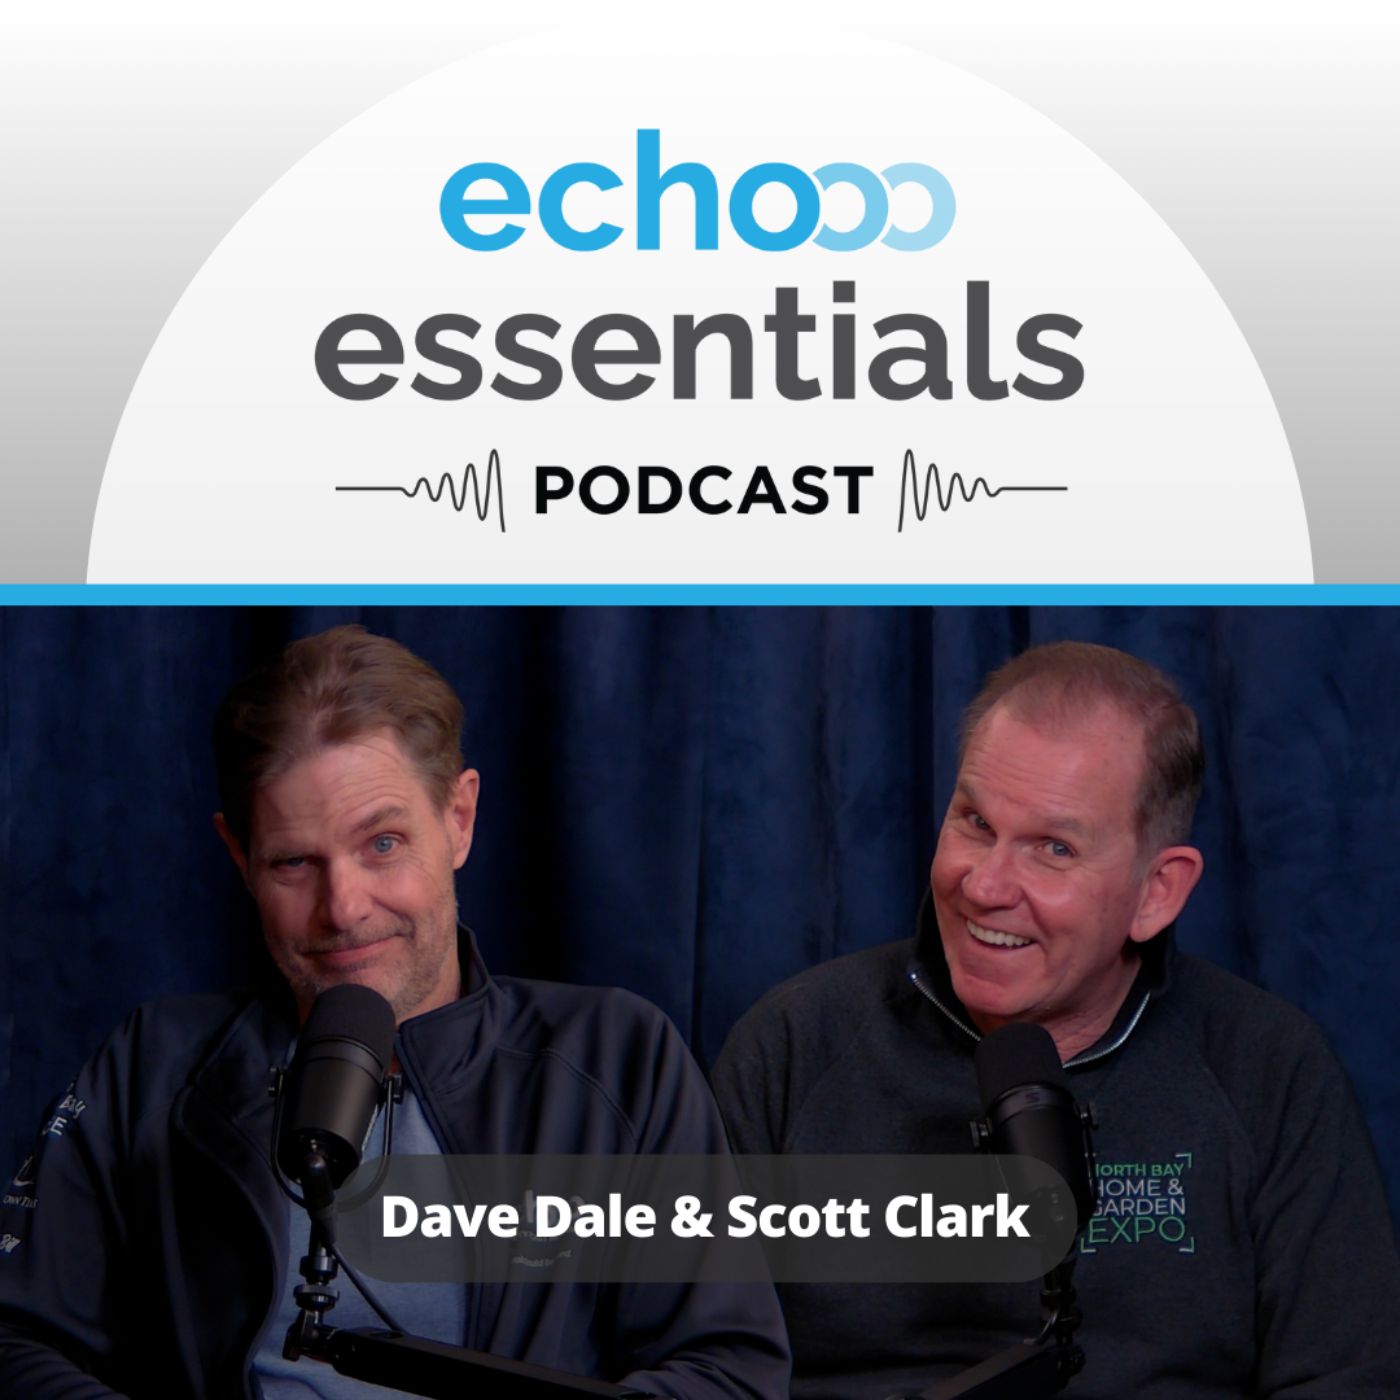 Echo Essentials Podcast - Dave Dale and Scott Clark - North Bay Echo